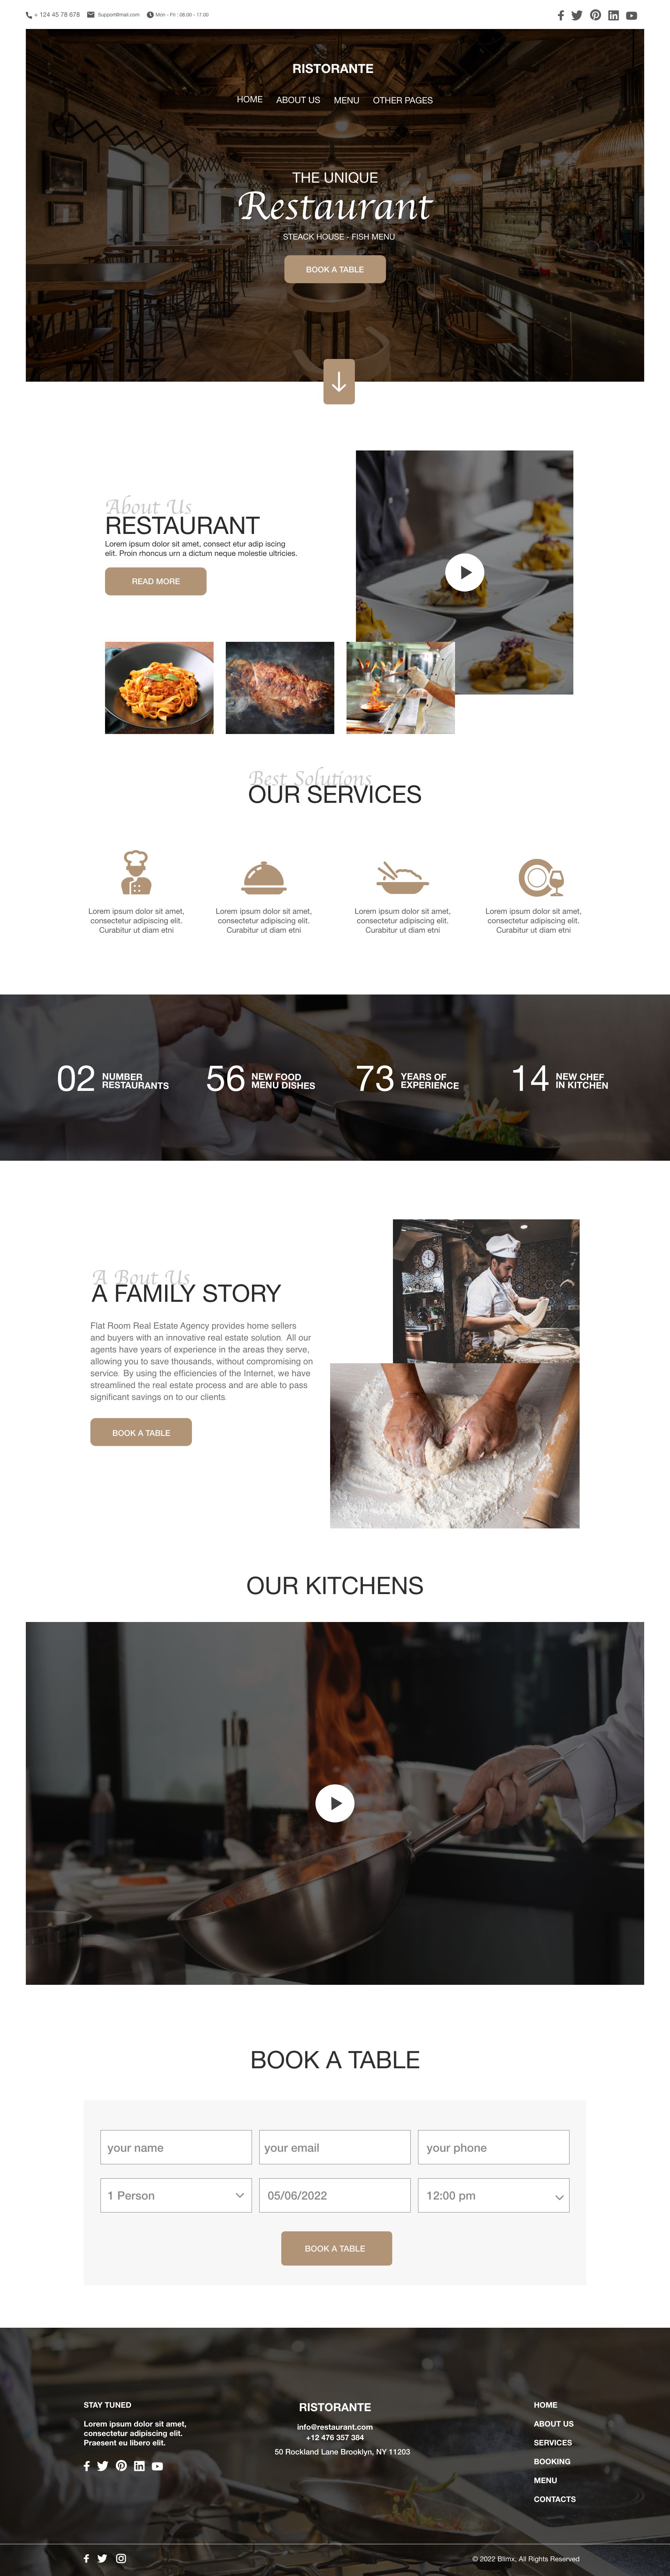 Italian Restaurant Website Design